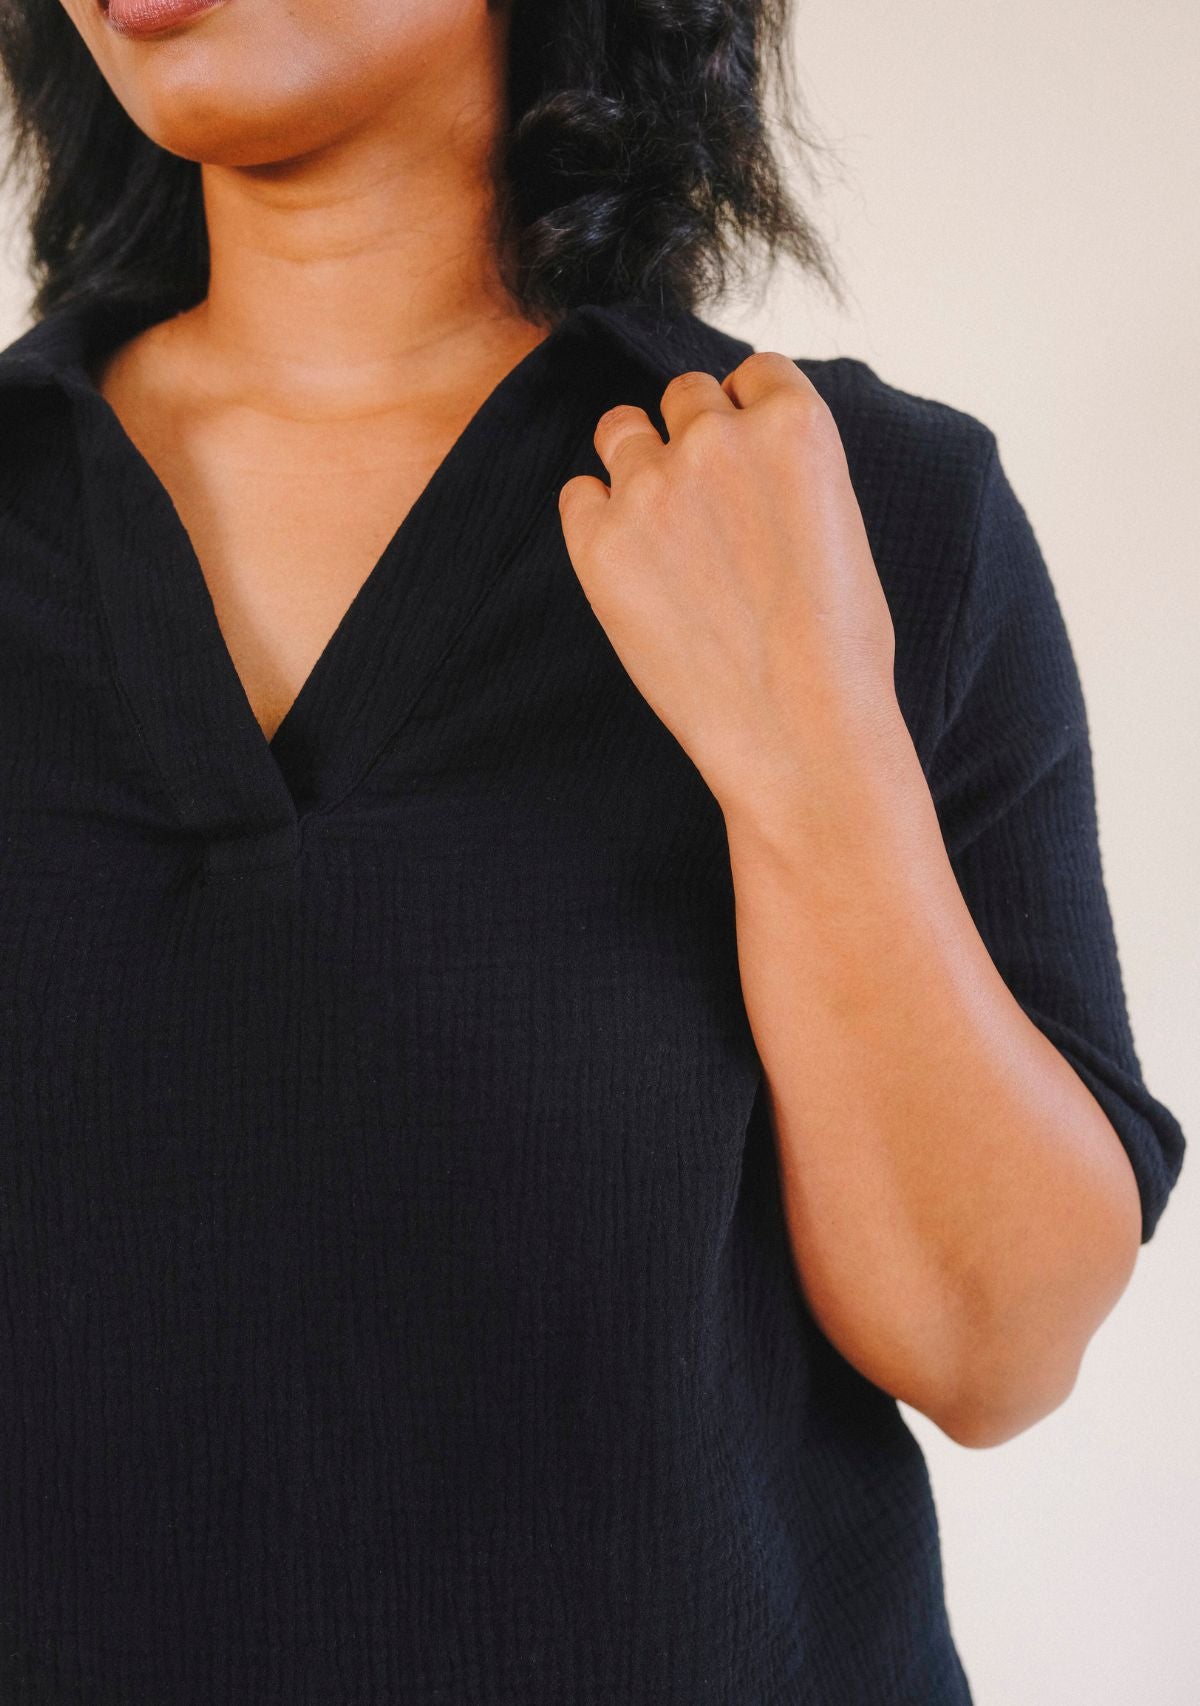 Poplinen x Simone Women's Organic Cotton Gauze Summer Shirt color Black sizes XS-3X made ethically in California